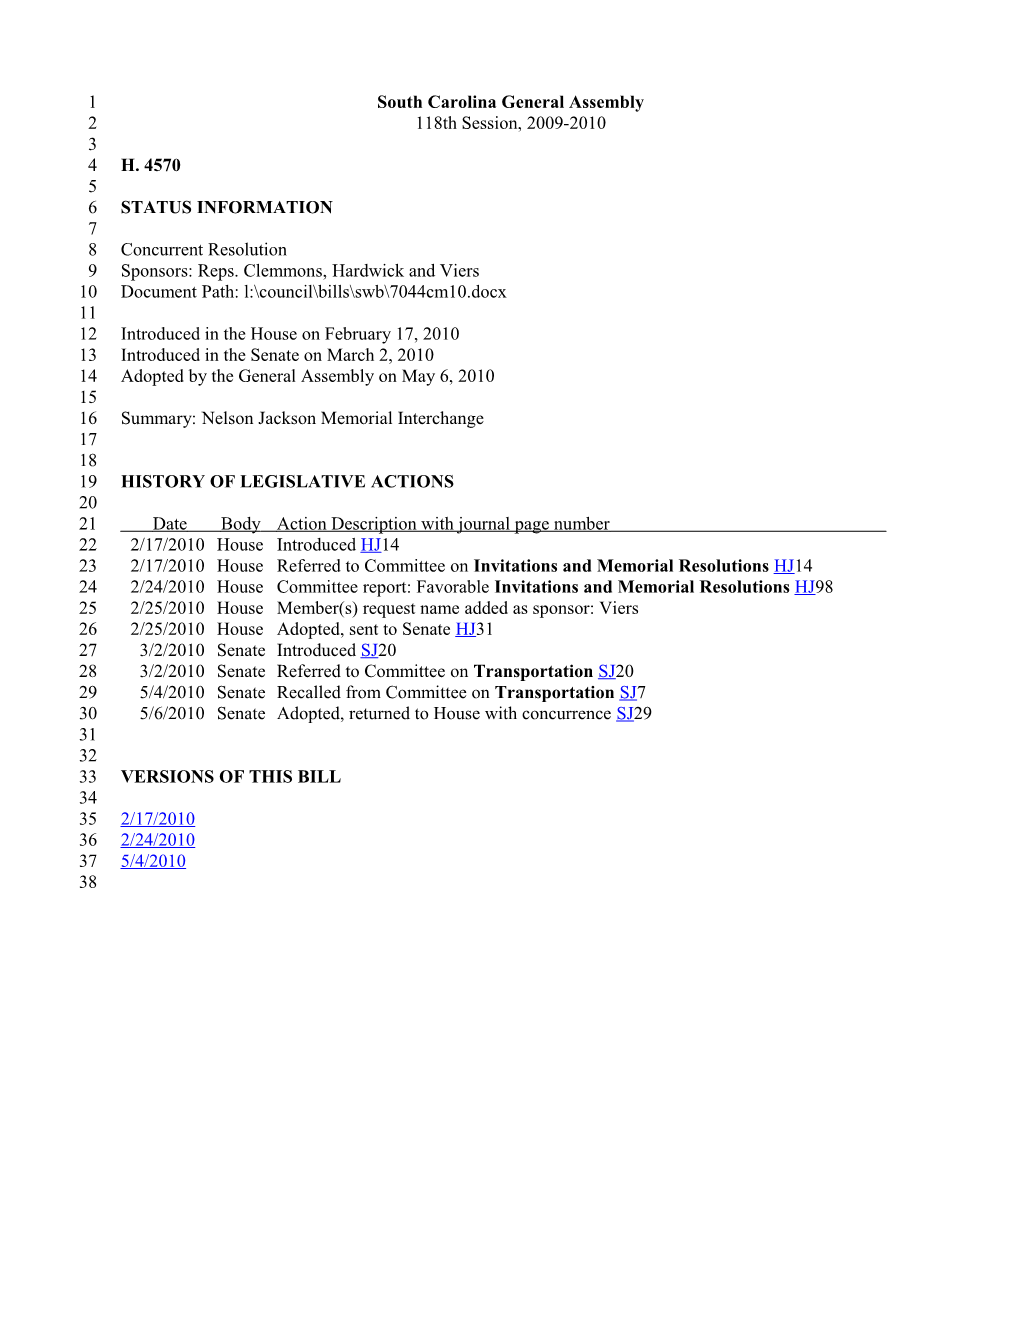 2009-2010 Bill 4570: Nelson Jackson Memorial Interchange - South Carolina Legislature Online